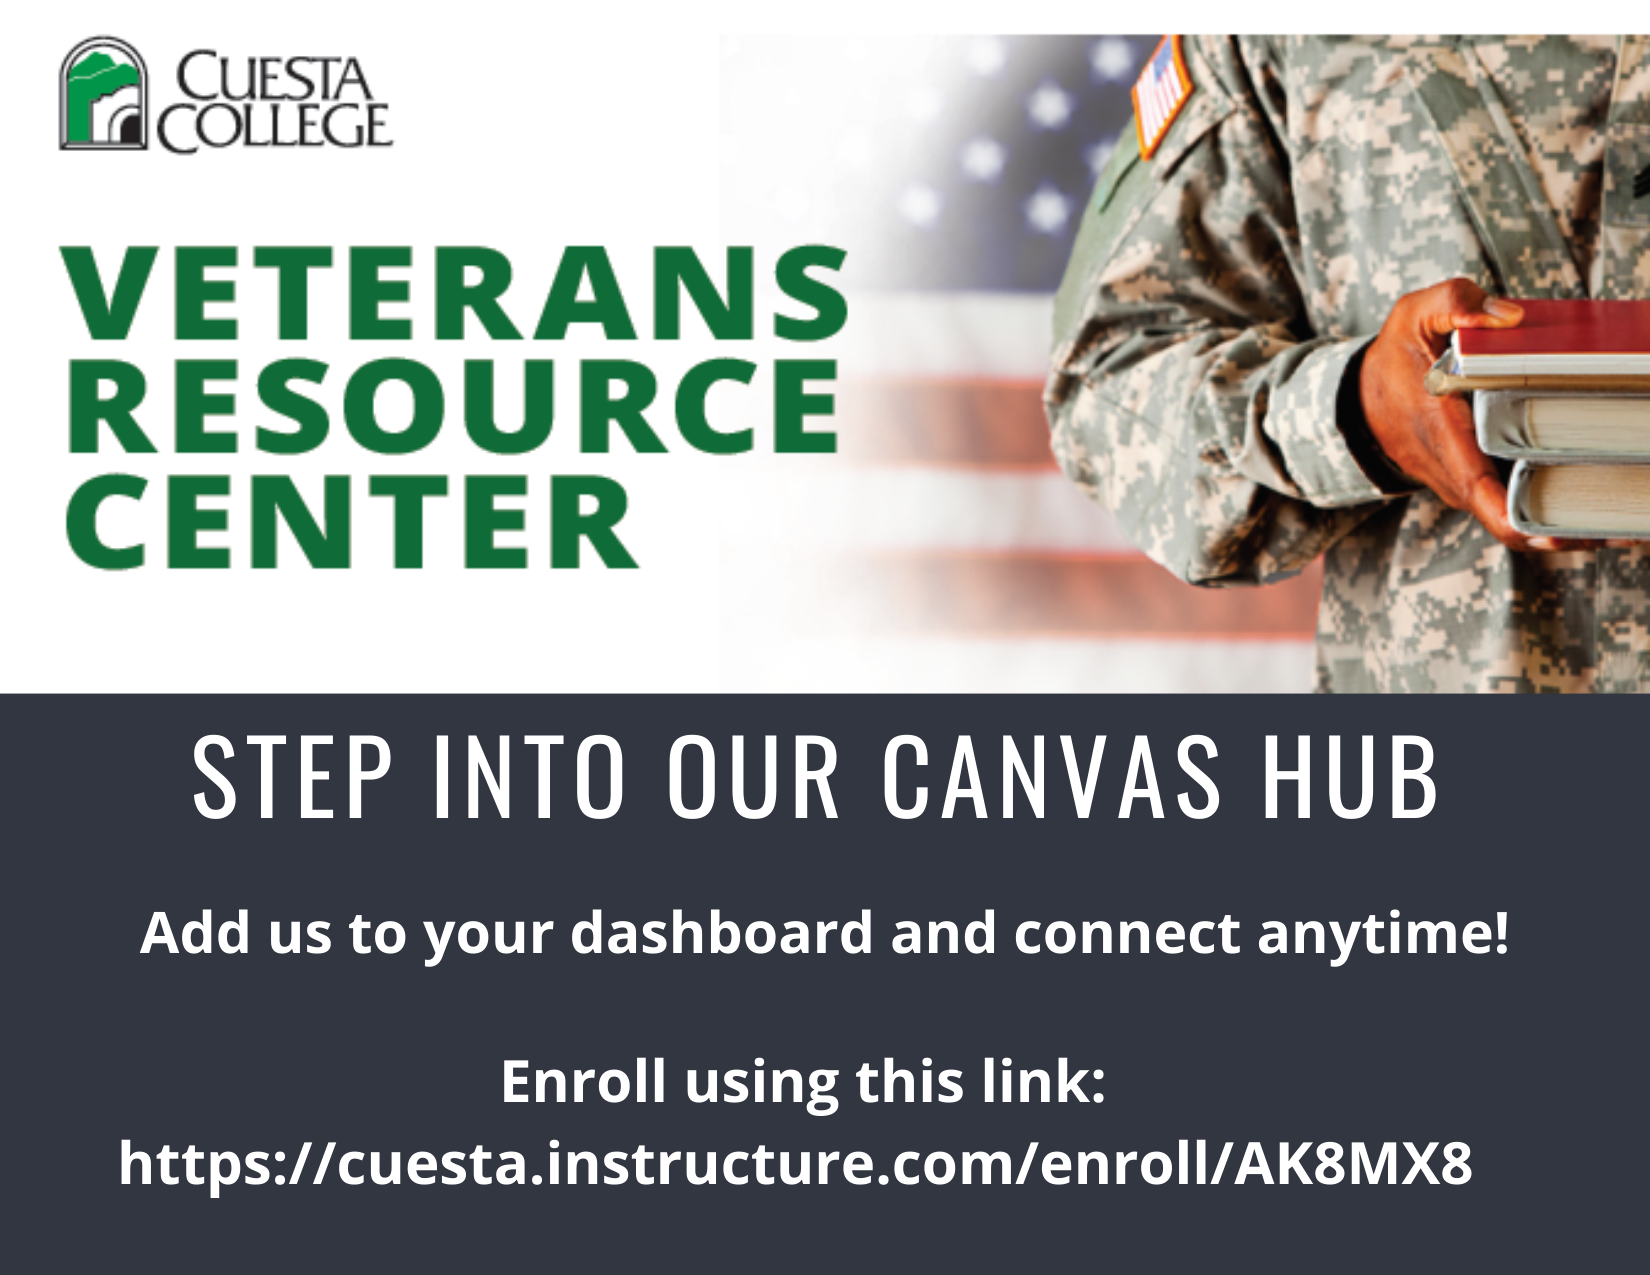 Vets Resource Center canvas hub. Enroll: https://cuesta.instructure.com/enroll/AK8MX8